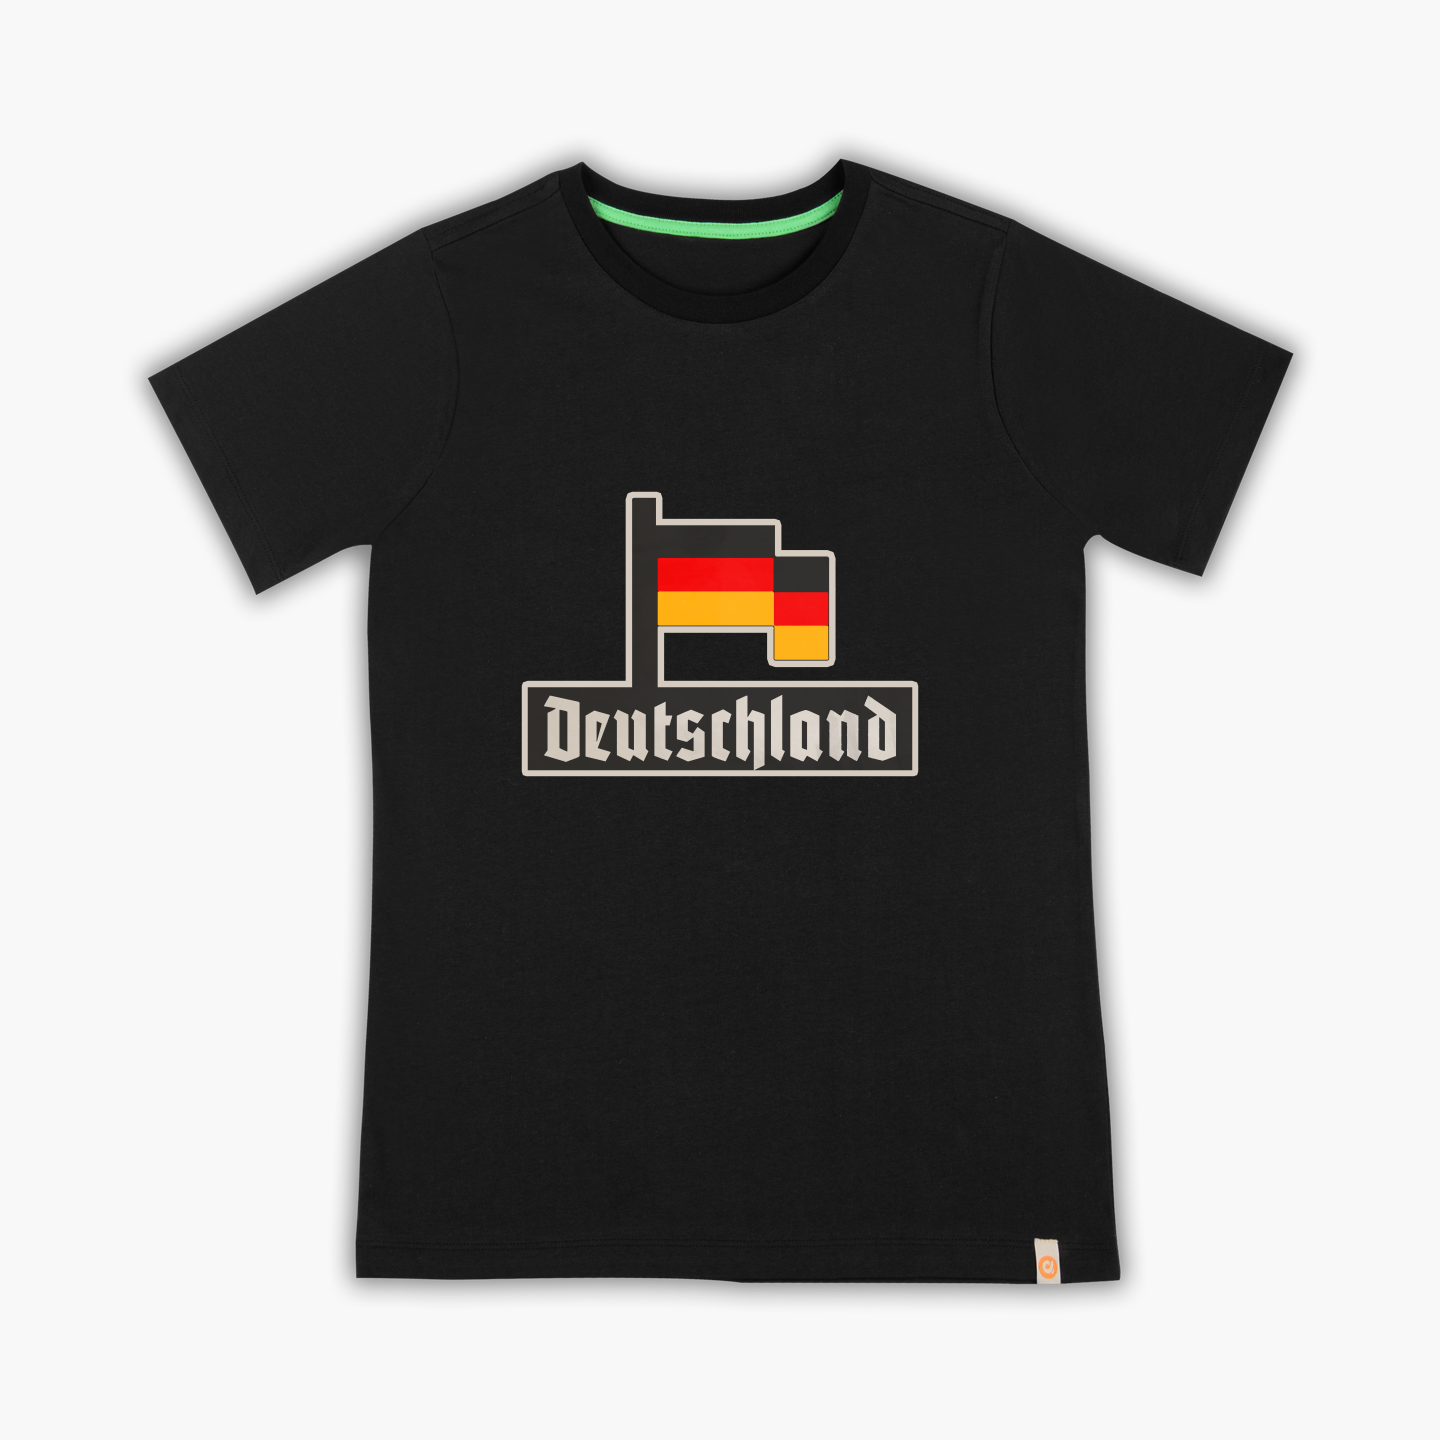 Deuchland - Tişört